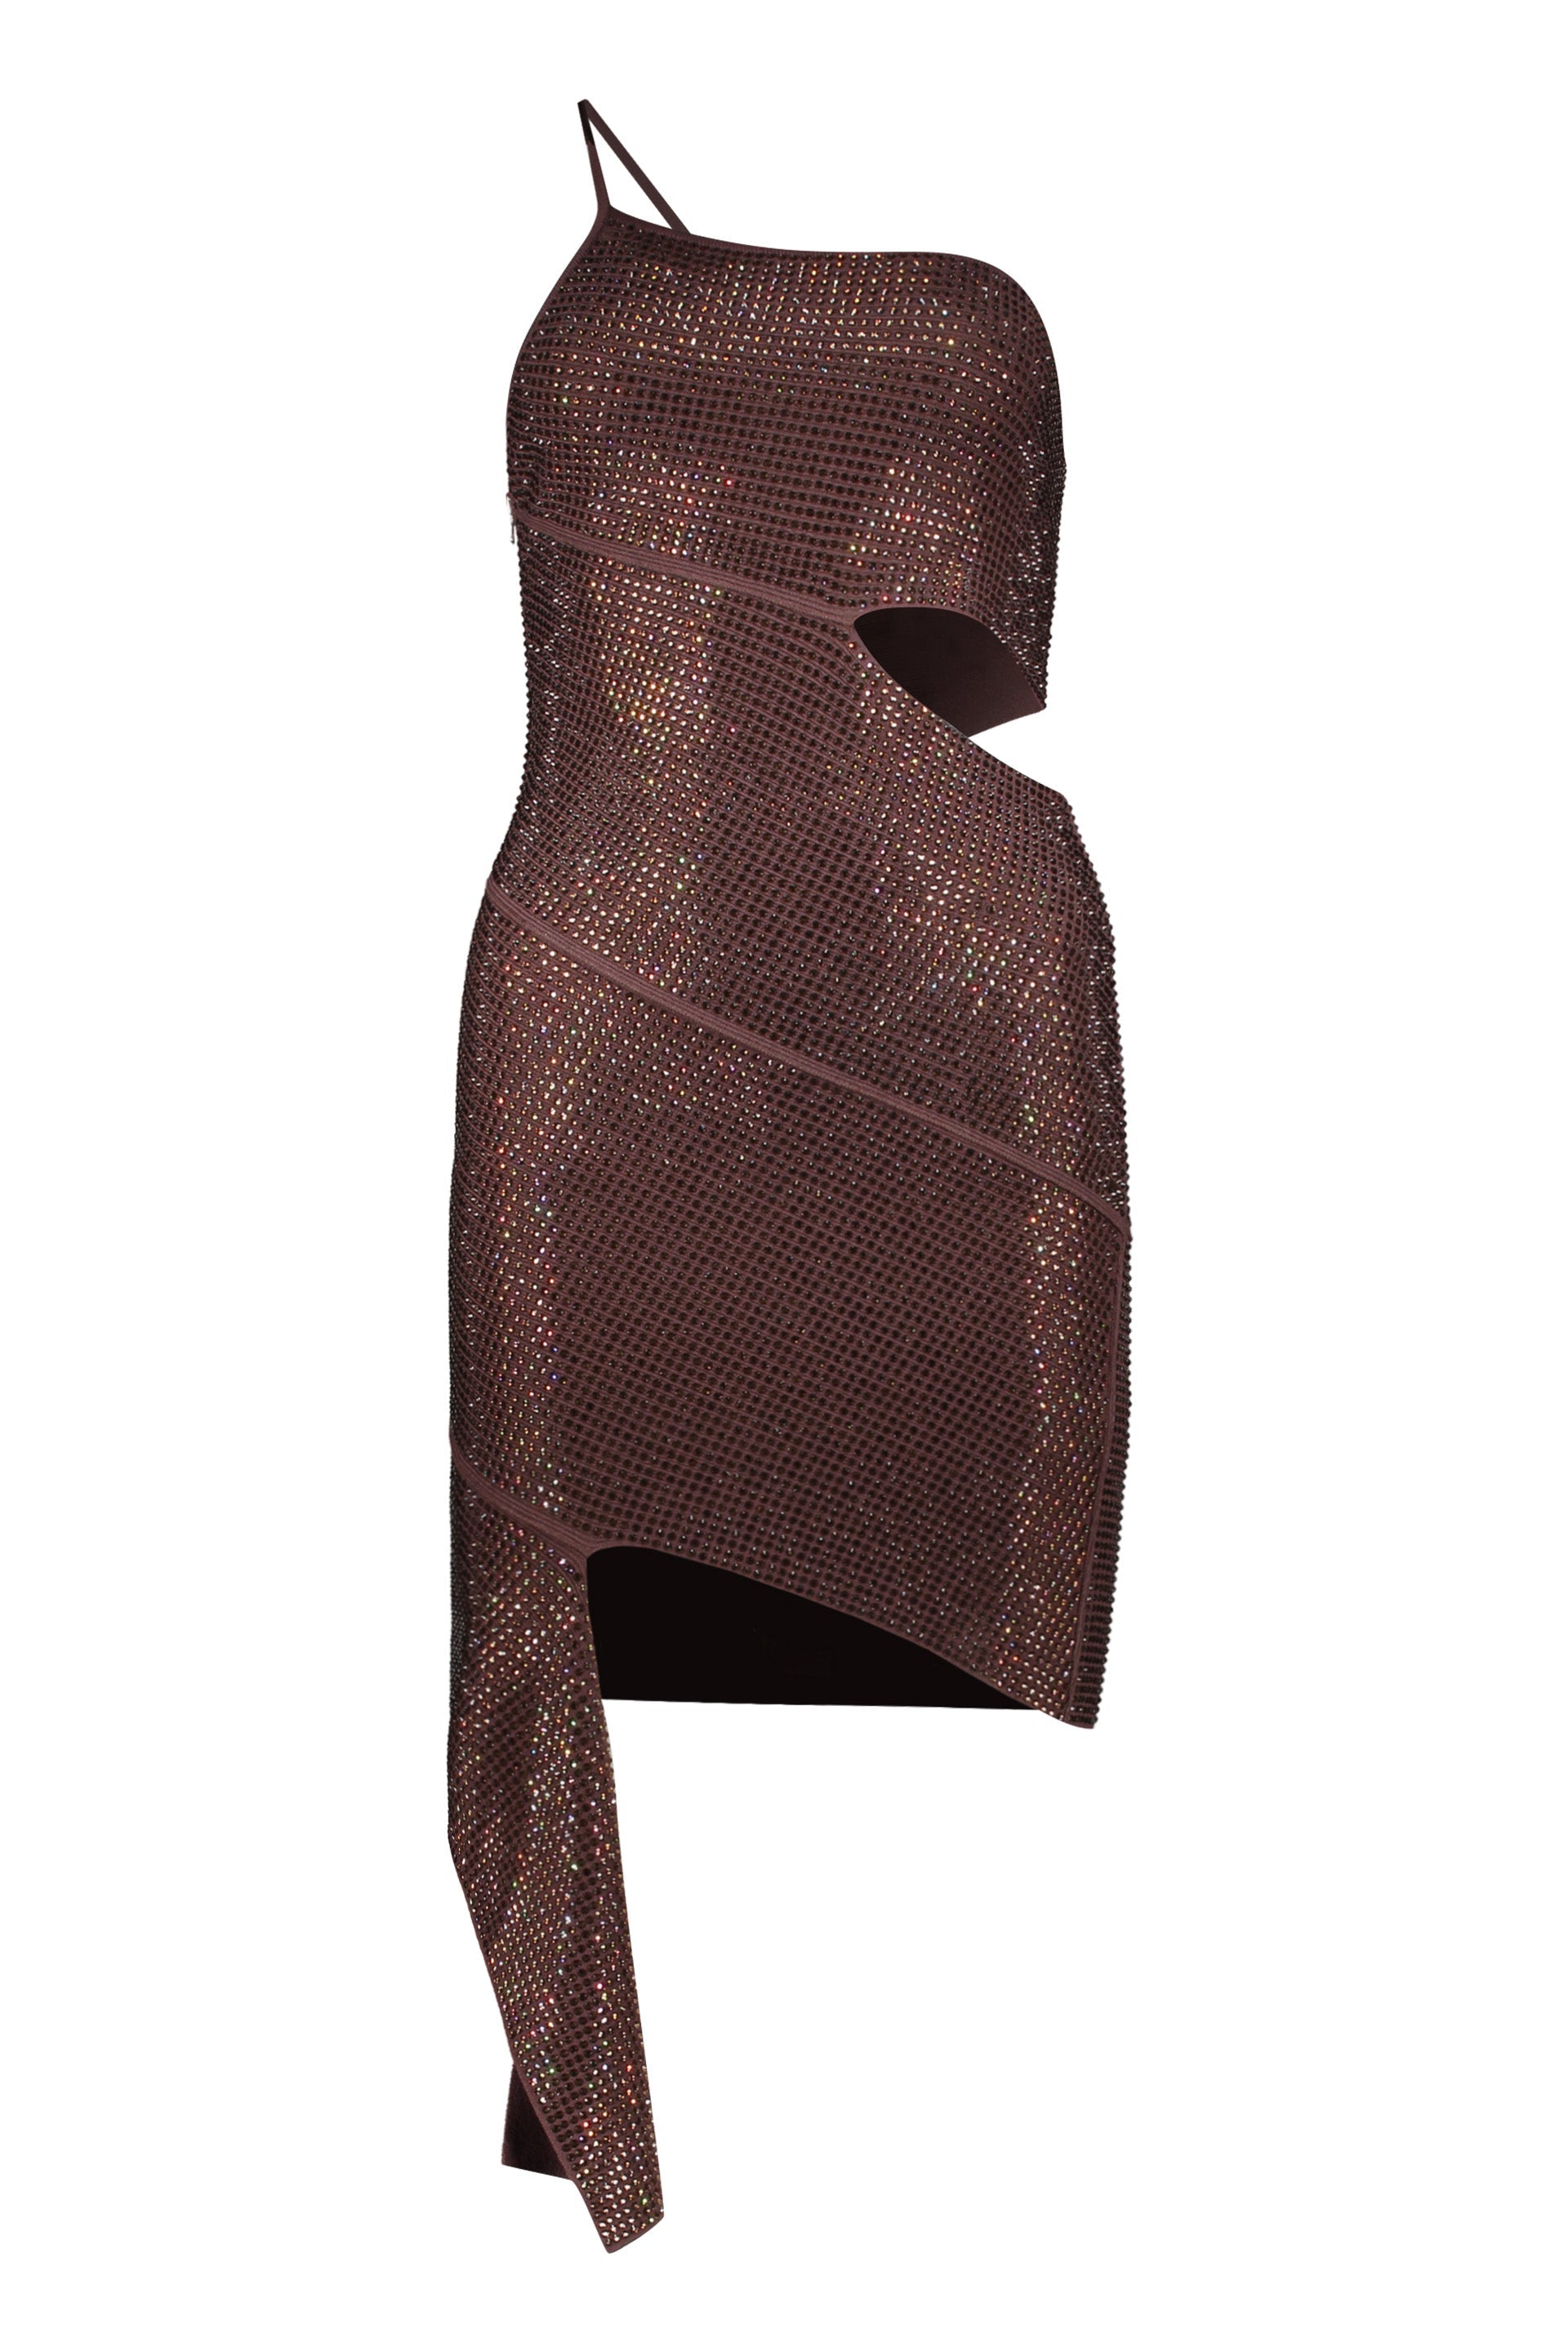 ANDREADAMO-OUTLET-SALE-Embellished-mini-dress-Kleider-Rocke-S-ARCHIVE-COLLECTION.jpg